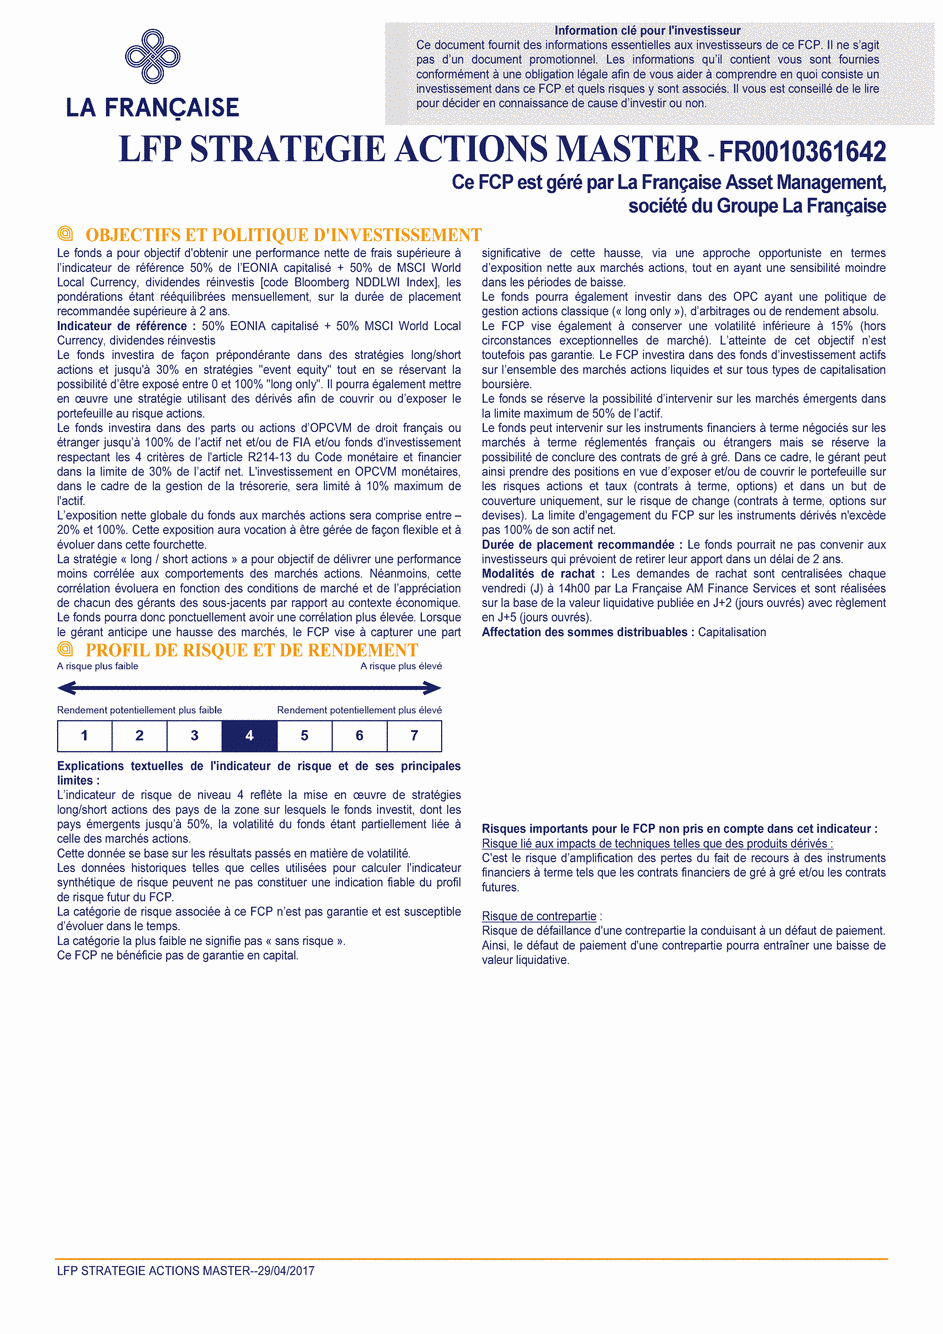 DICI LFP Strategie Actions Master - 29/04/2017 - Français